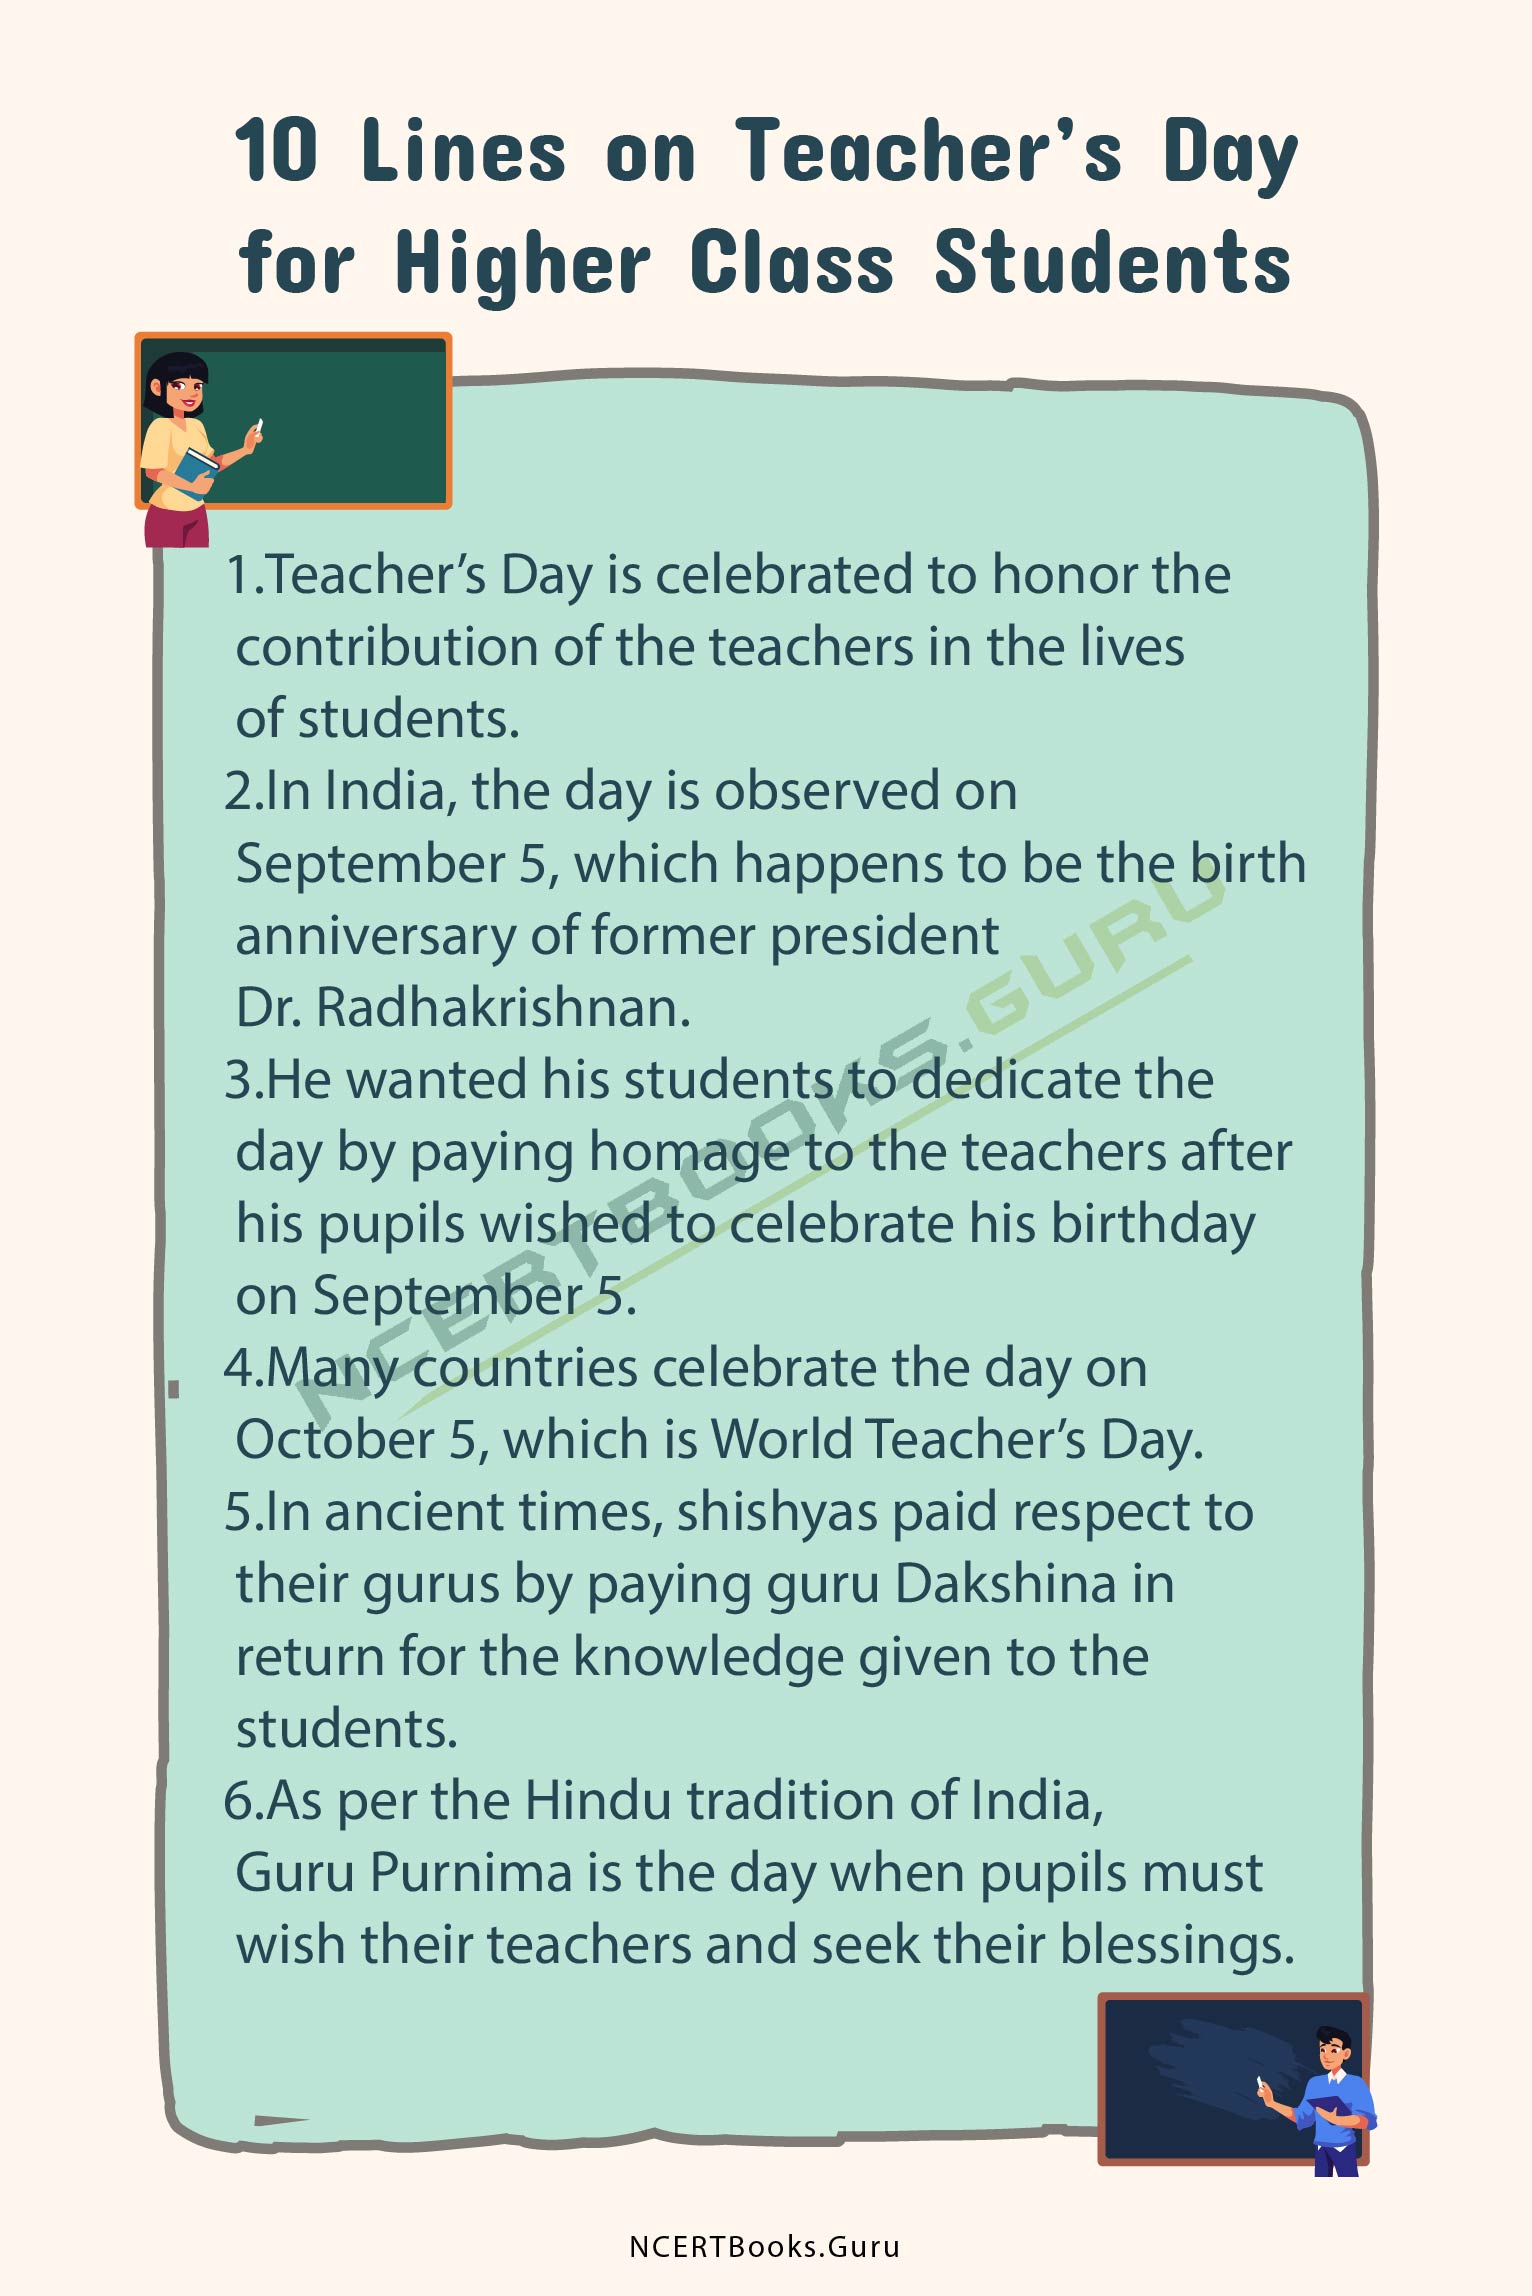 10 Lines on Teacher’s Day 2